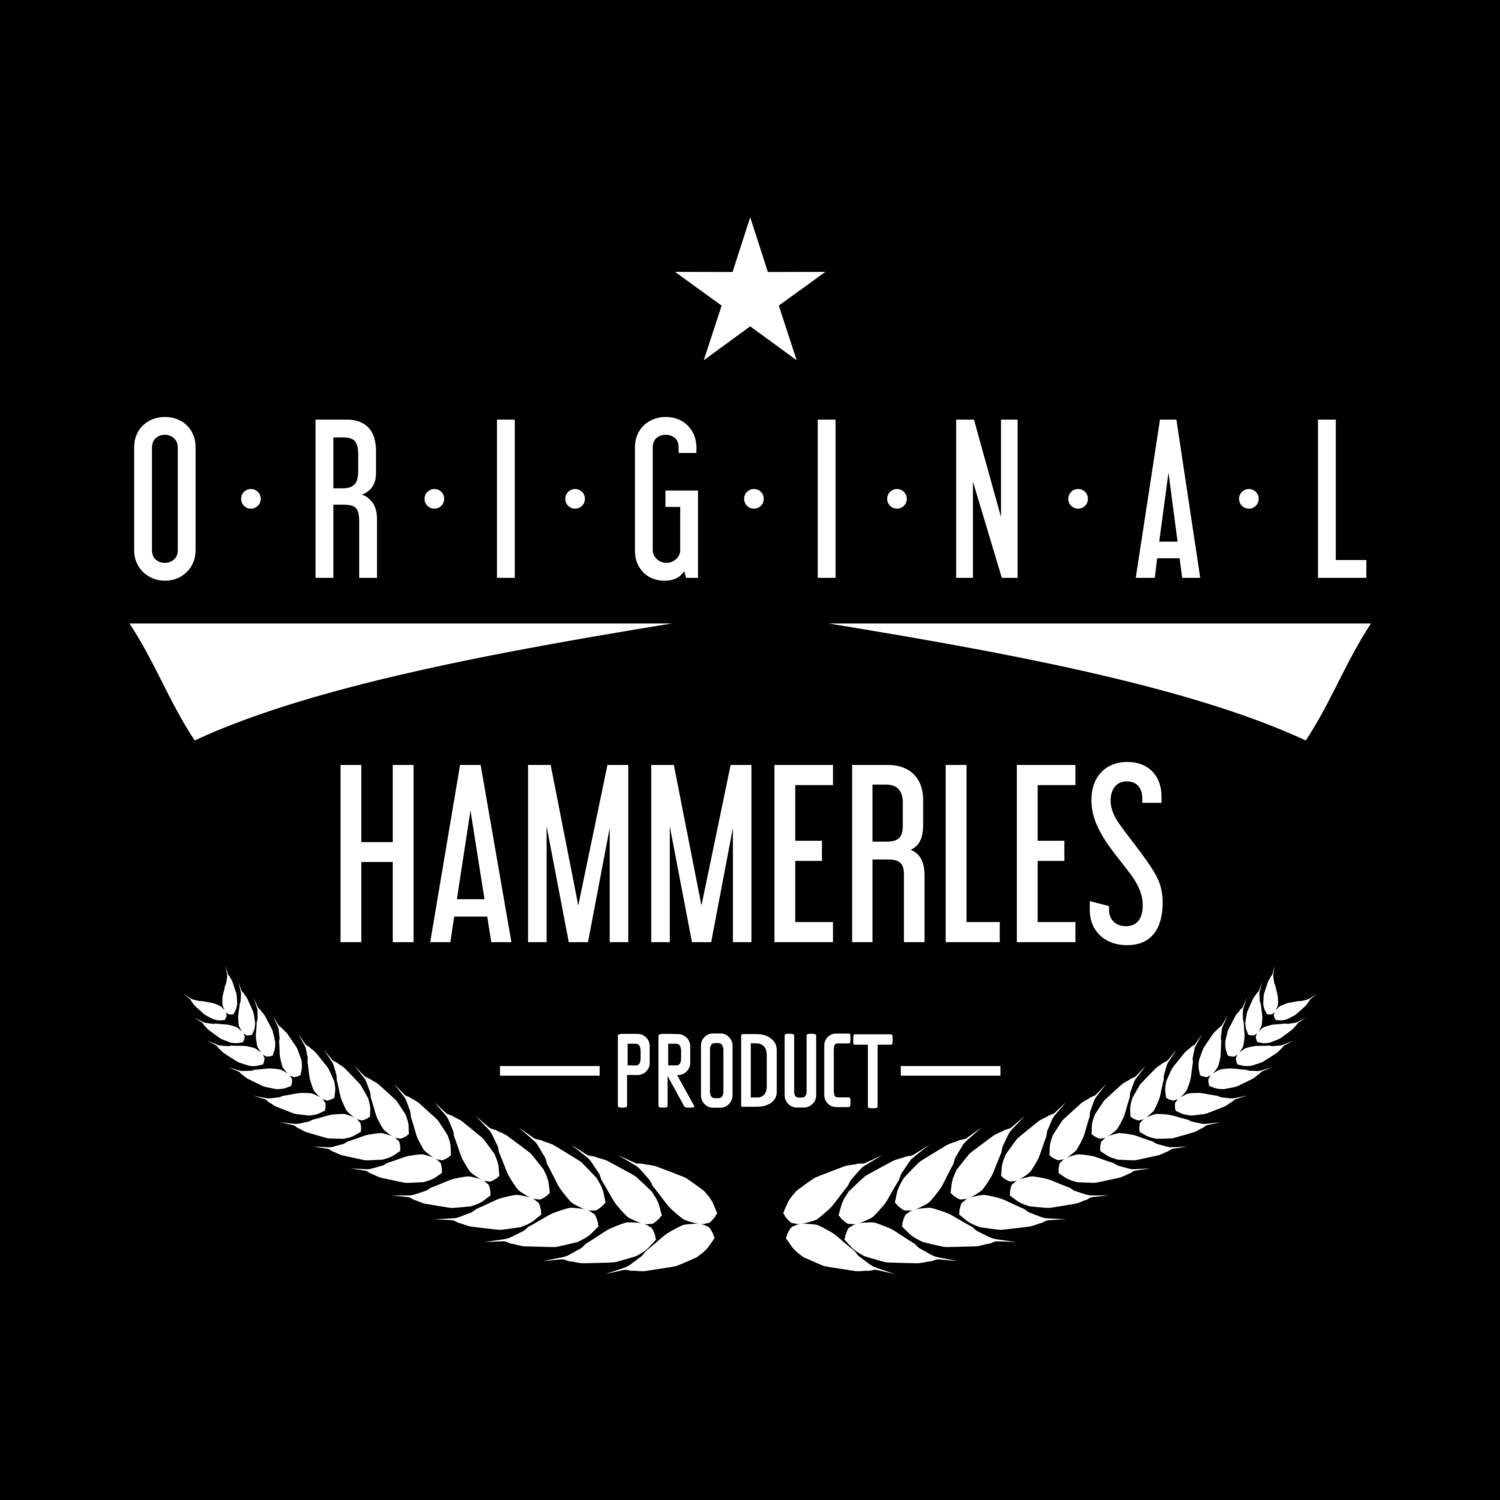 Hammerles T-Shirt »Original Product«